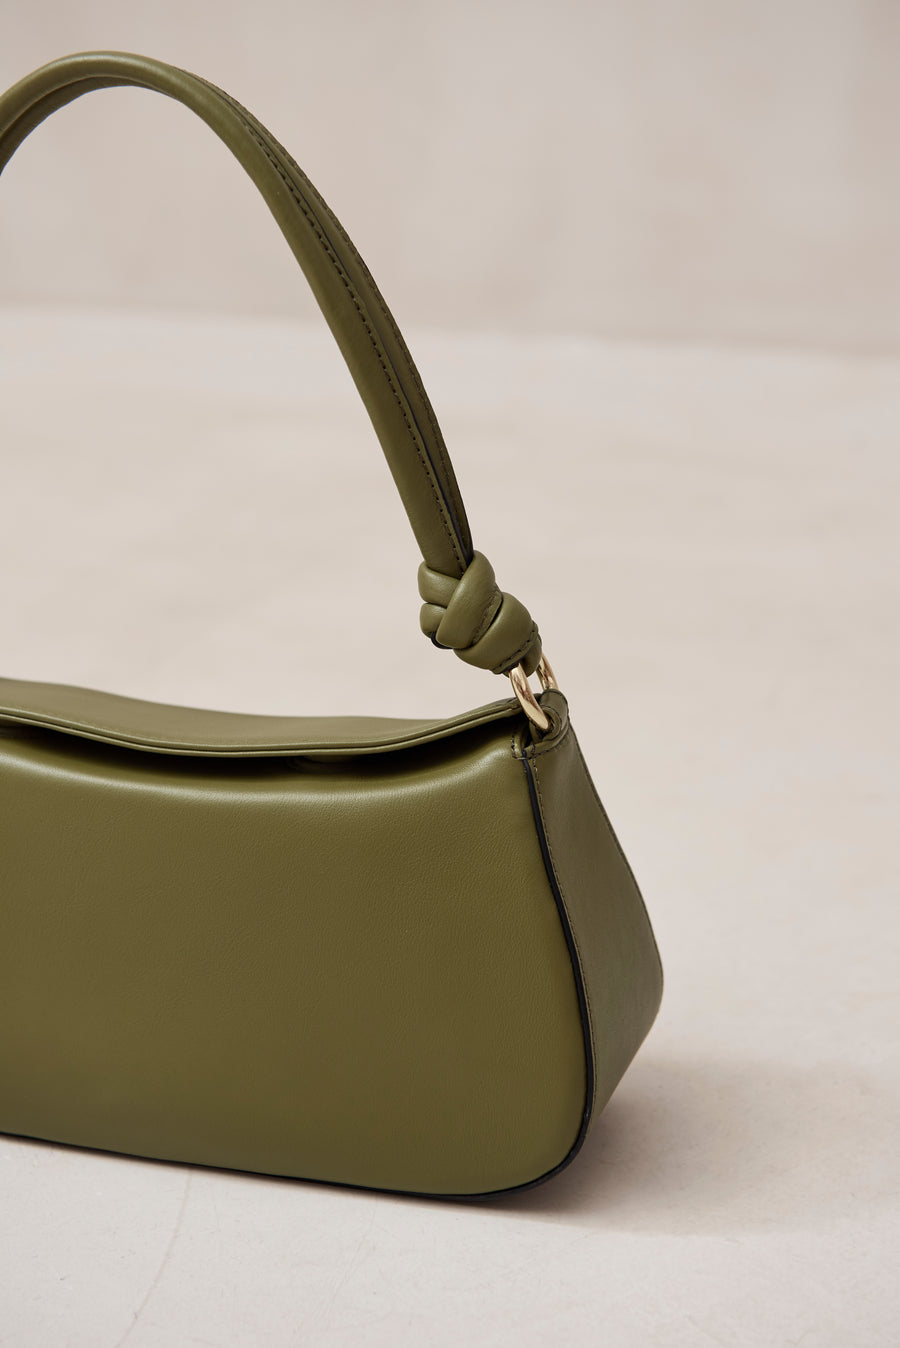 The Curl Knot Green Leather Shoulder Bag